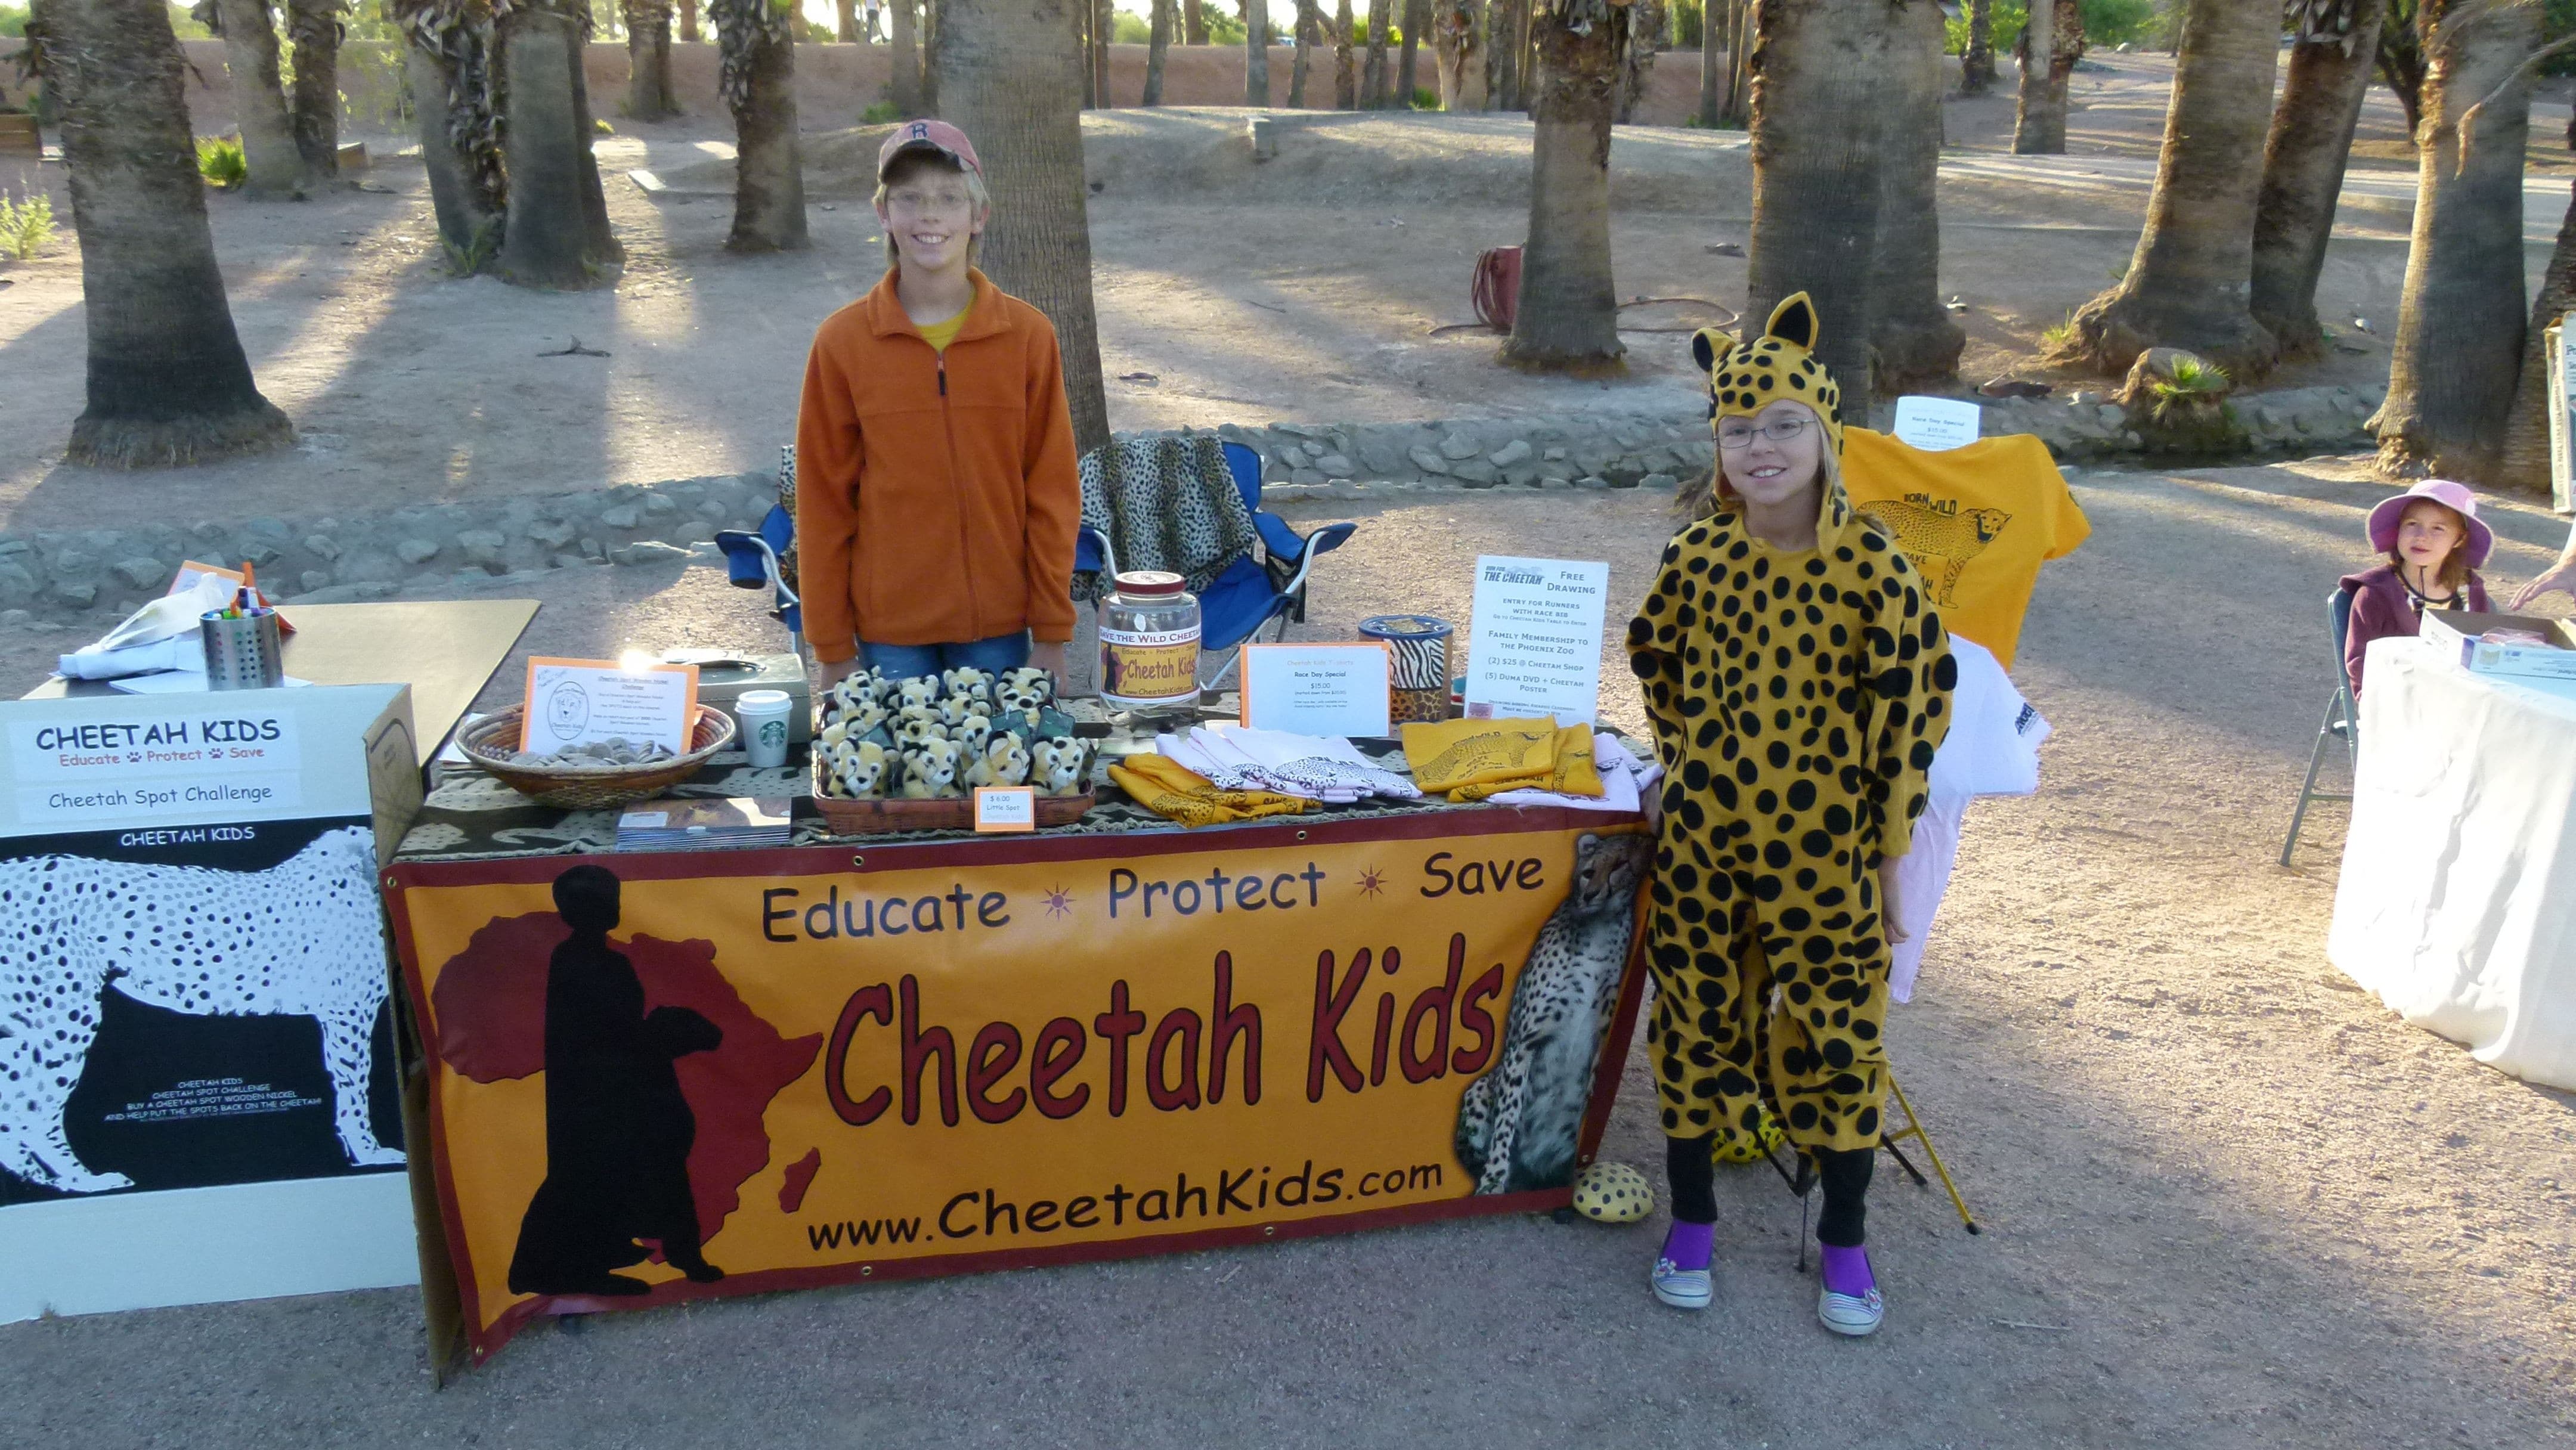 Cheetah Kids sell merchandise to raise funds for wild cheetahs.